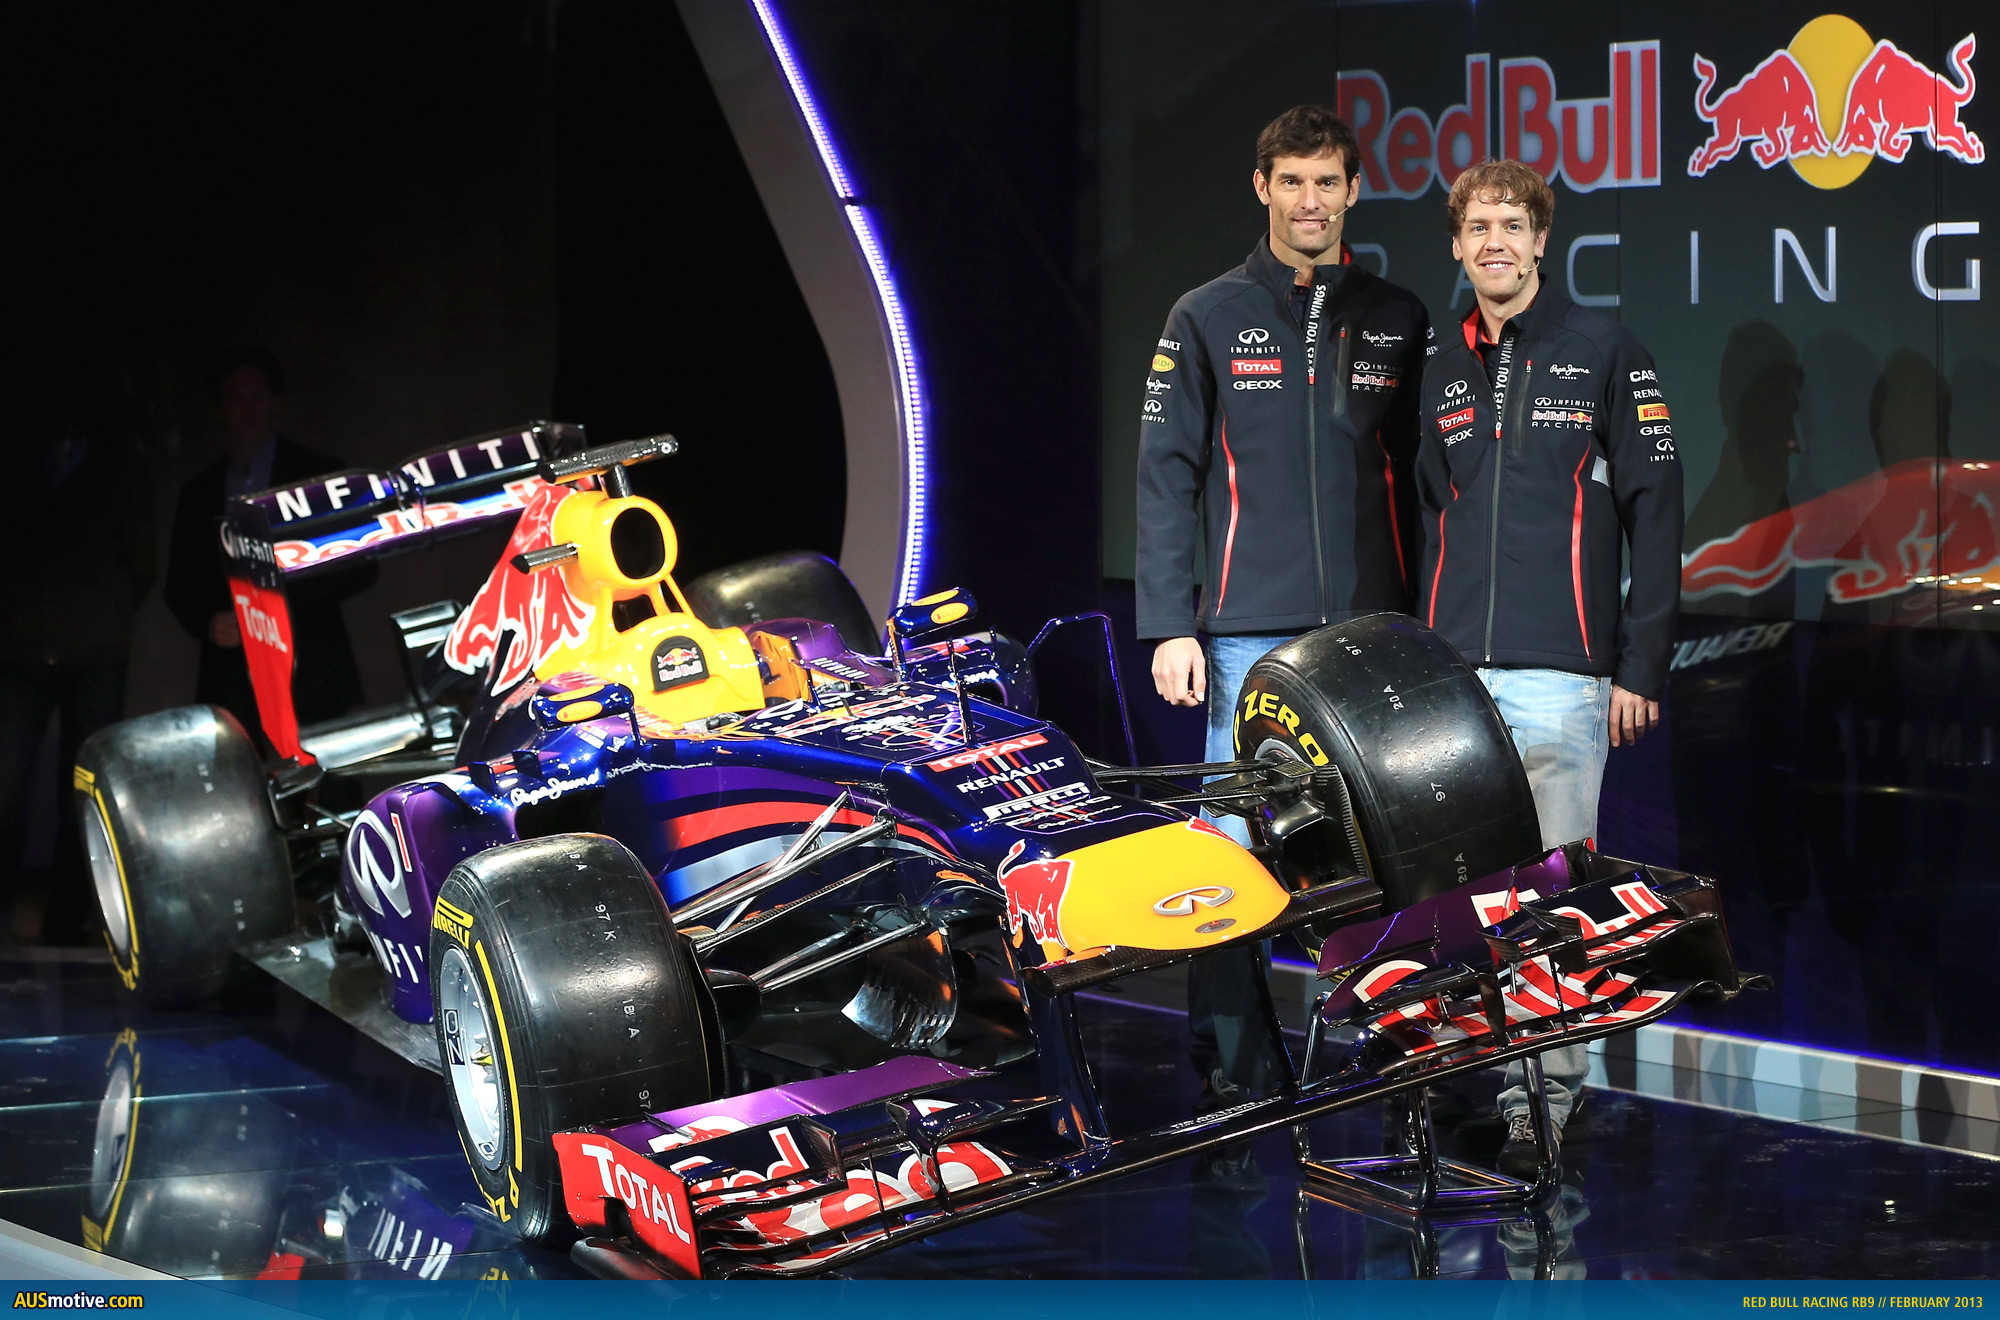 AUSmotive.com » OFFICIAL: Red Bull Racing unveils 2010 F1 car